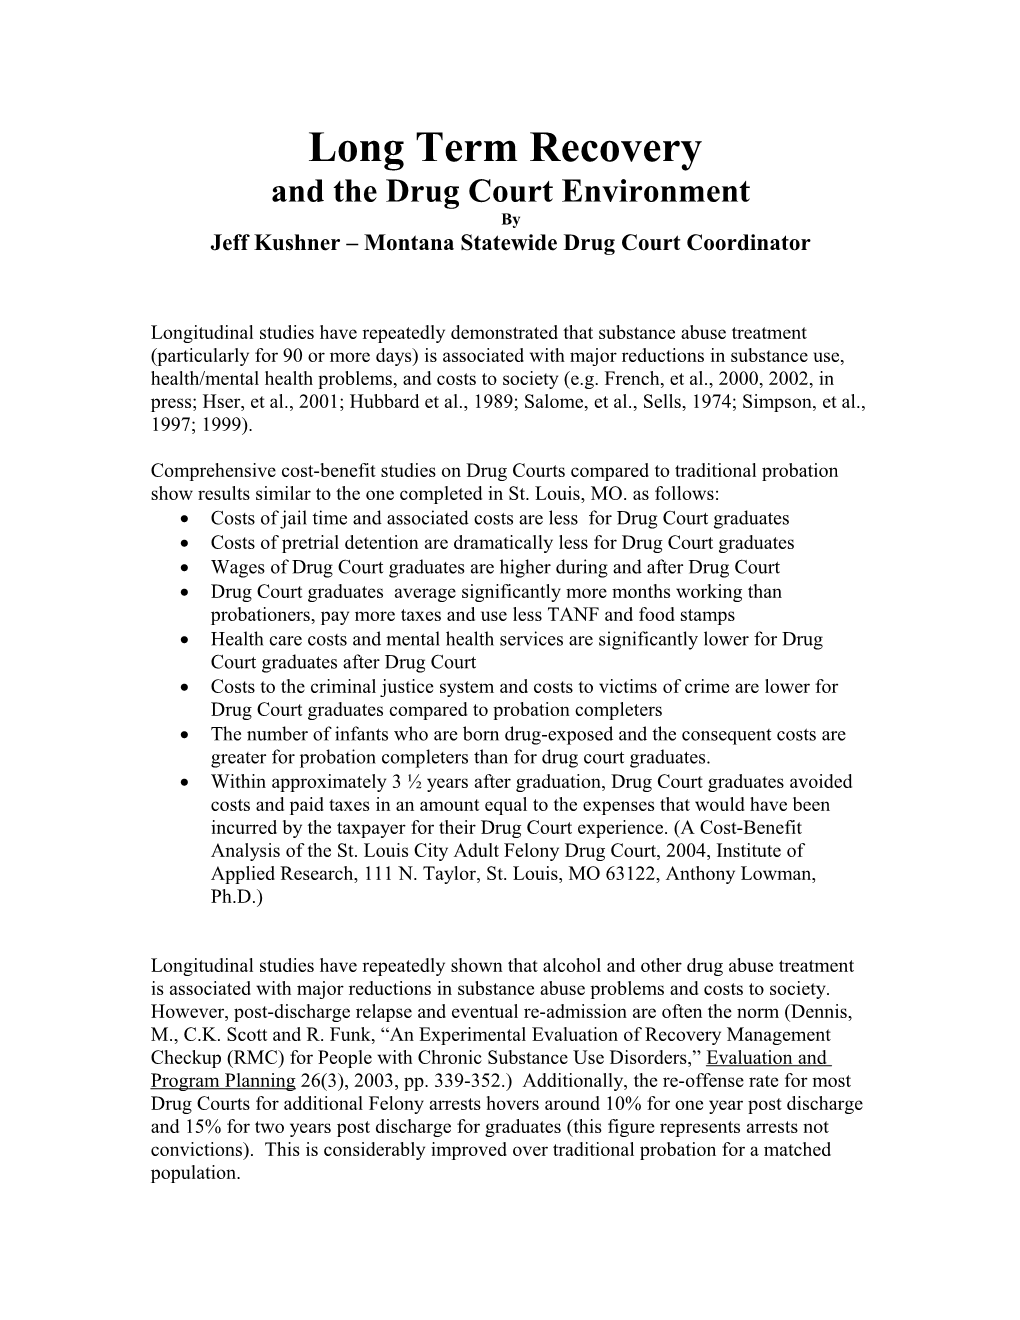 Jeff Kushner Montana Statewide Drug Court Coordinator